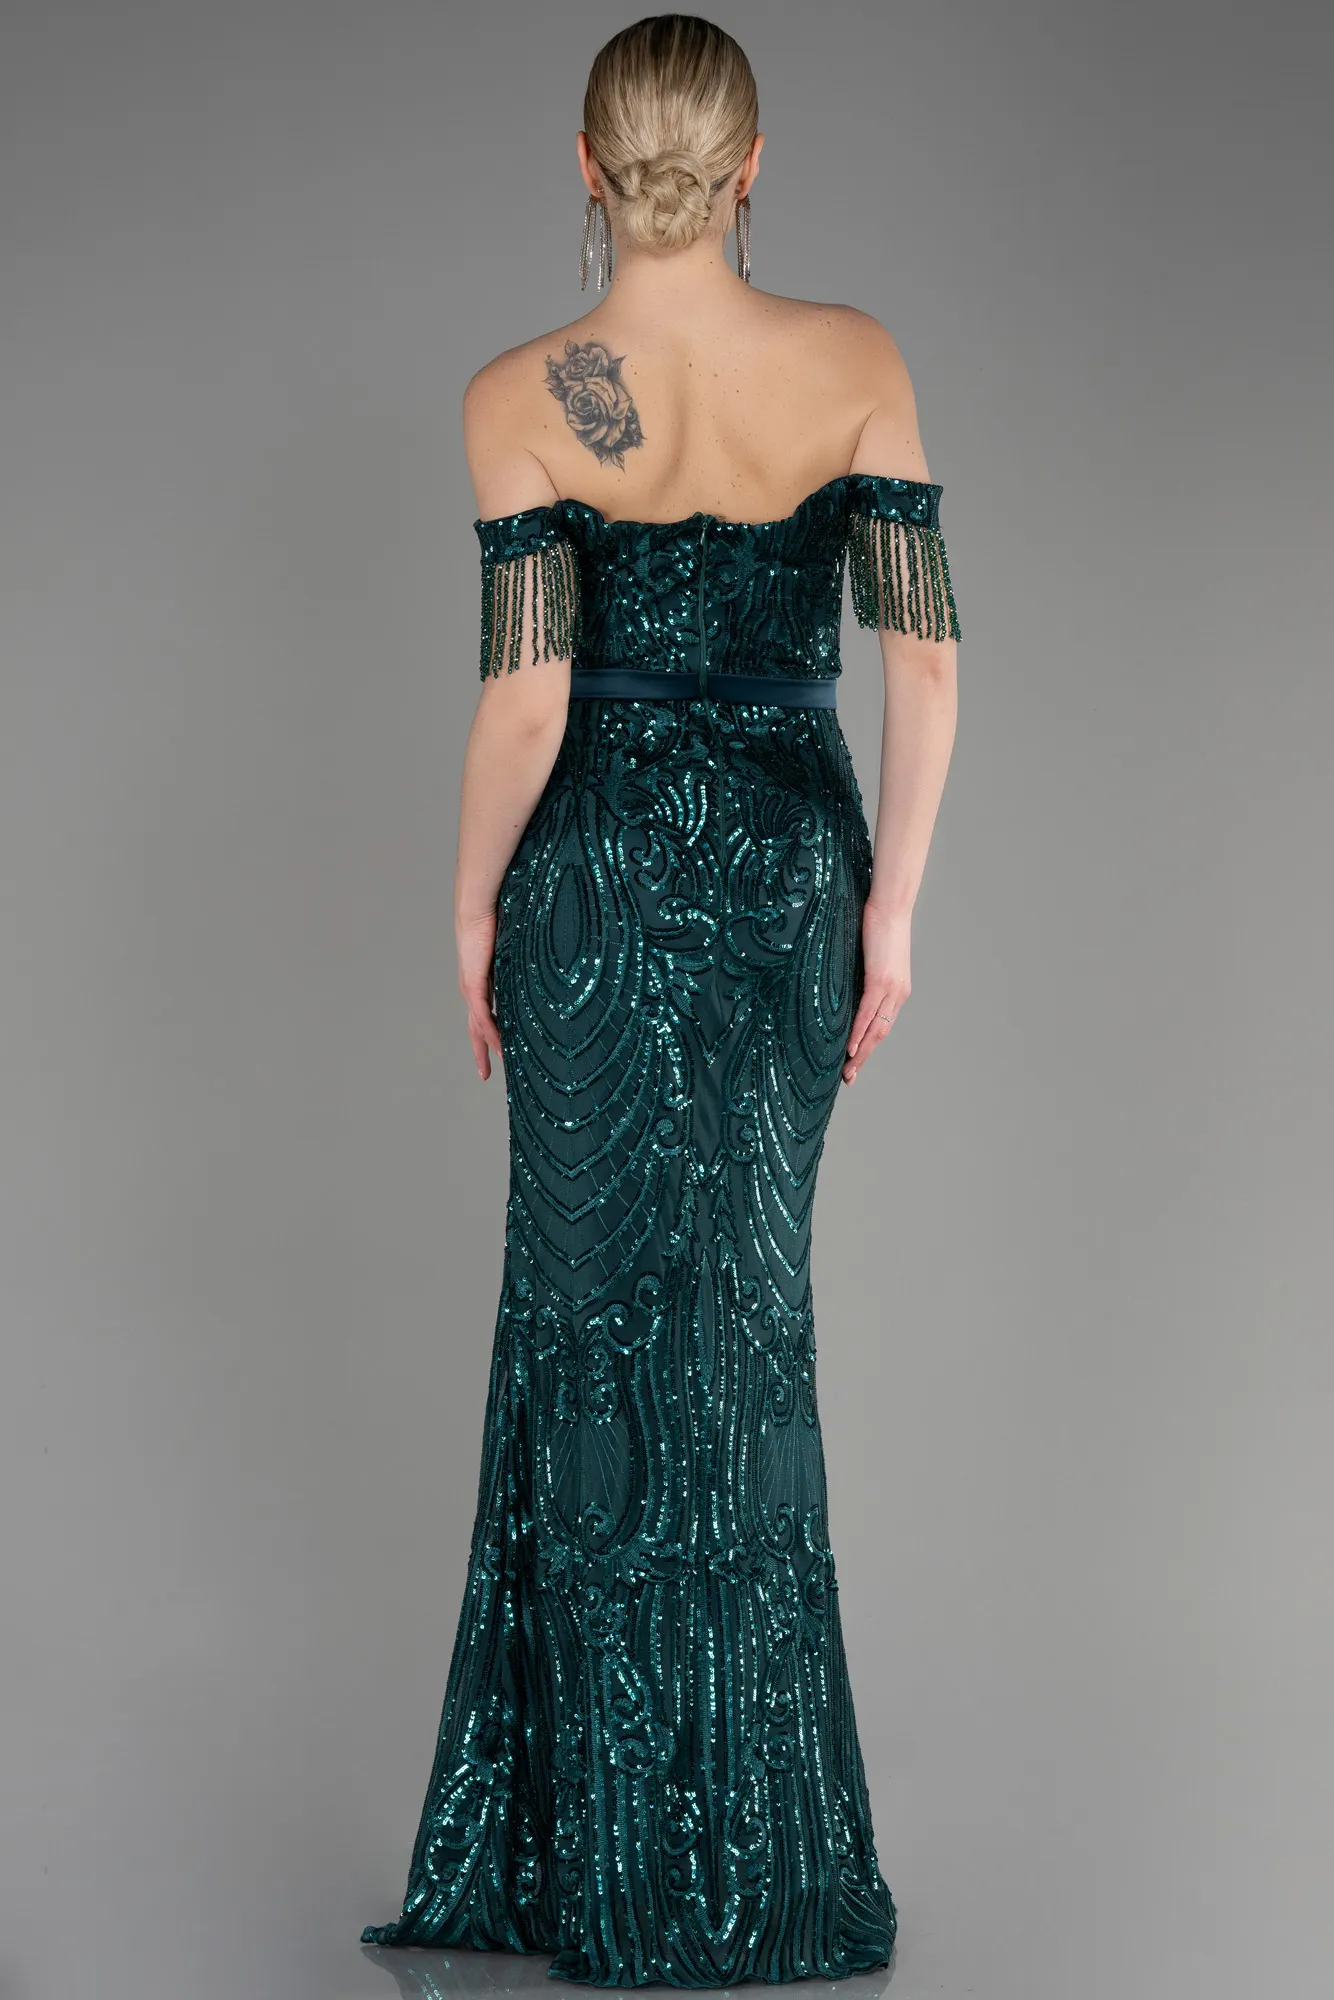 Emerald Green-Long Mermaid Prom Dress ABU3783